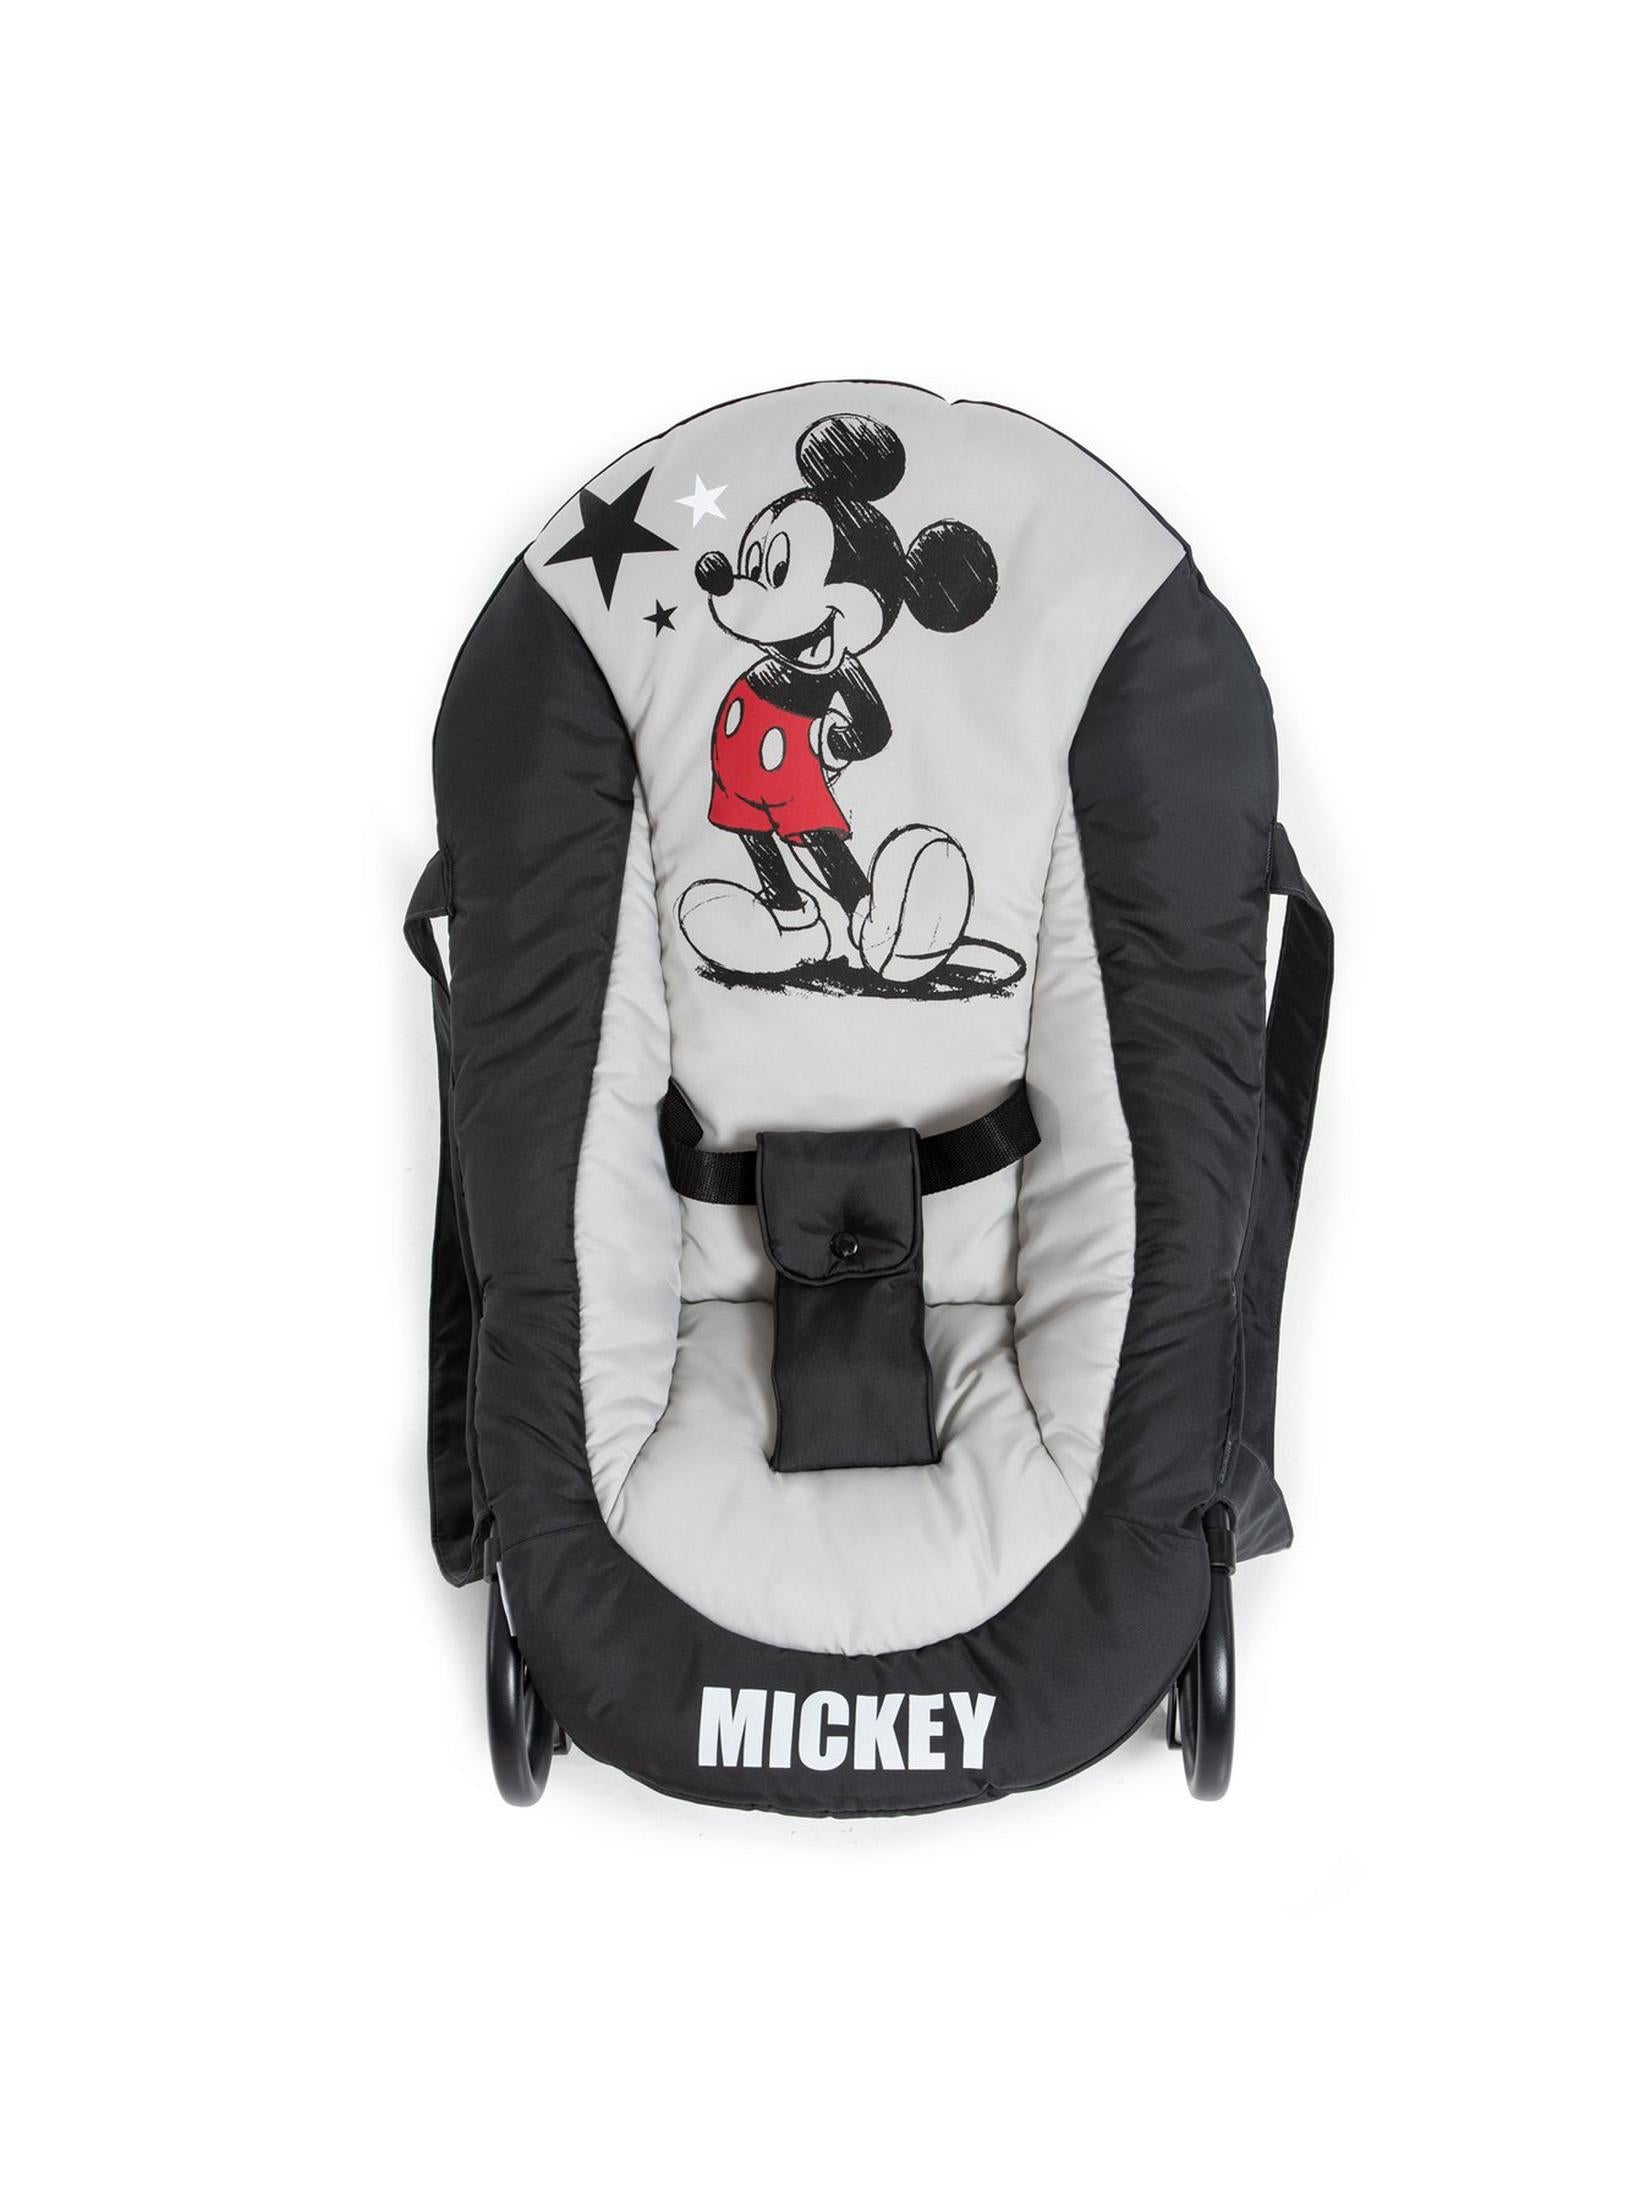 Hauck Disney Rocky Bouncer - Mickey Stars - Multi